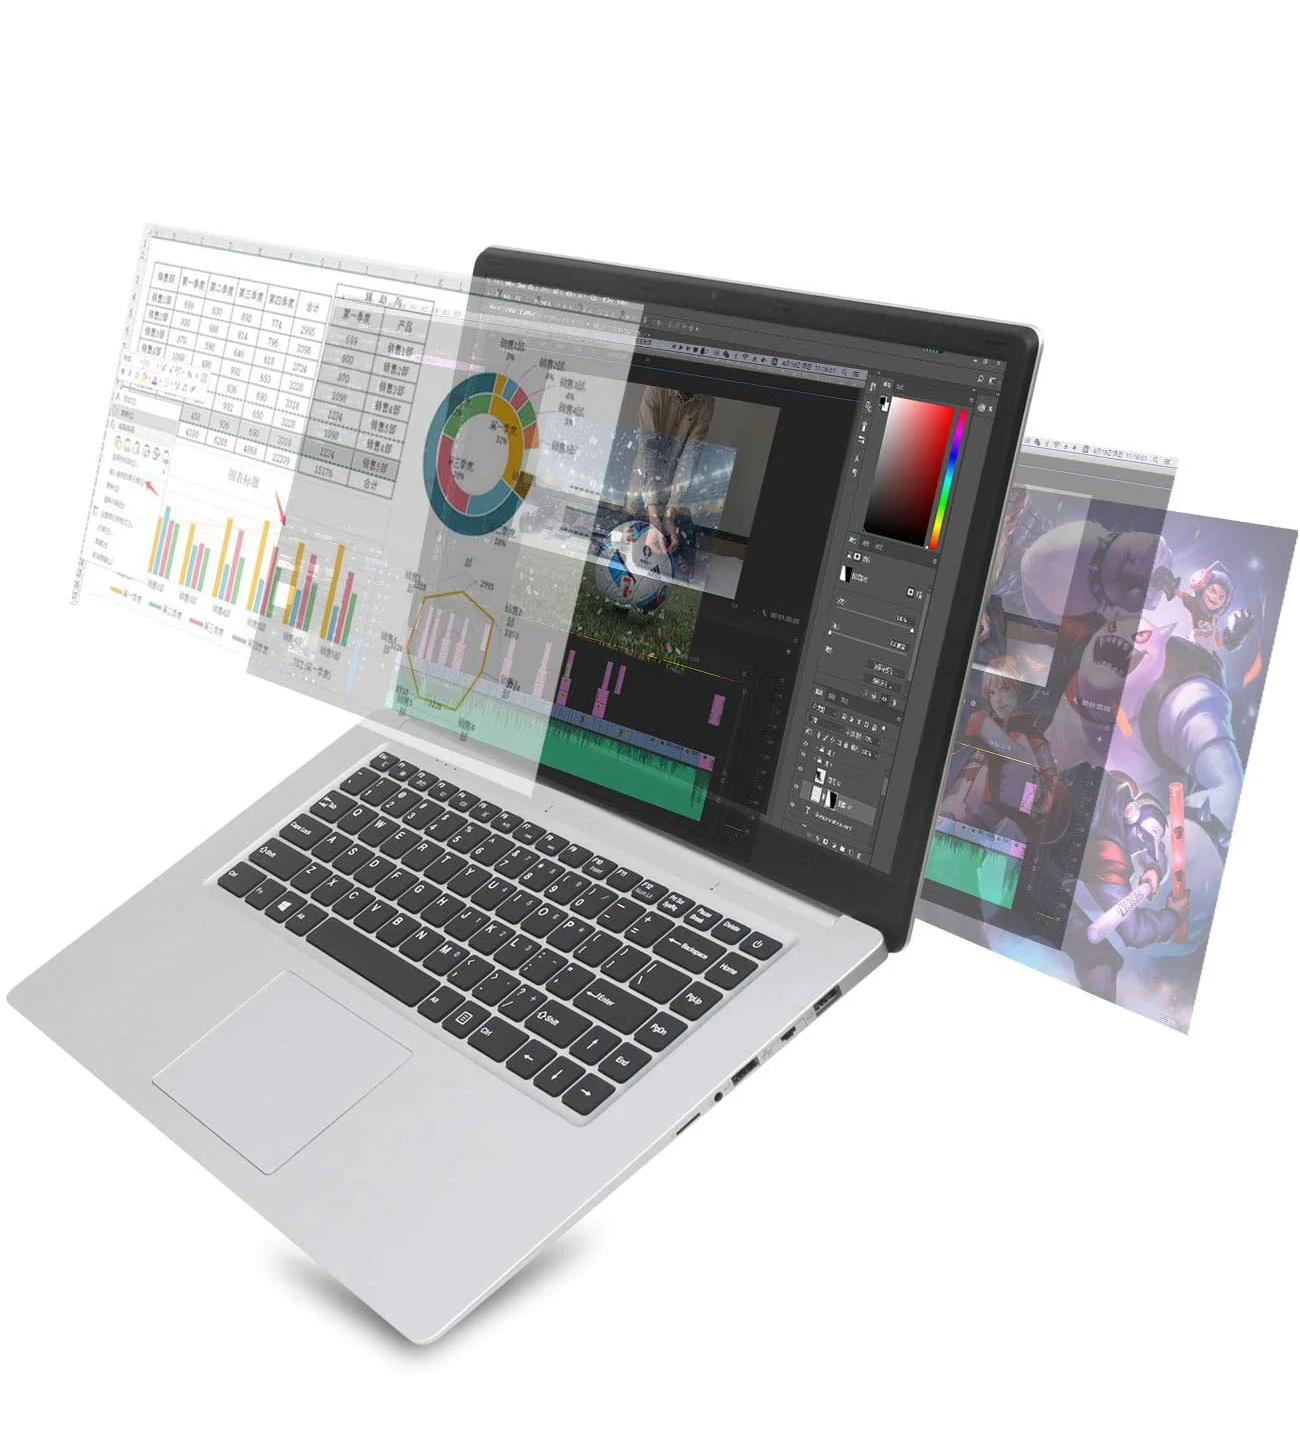 ZEUSLAP 15.6 Inch Laptop 8GB RAM 500GB HDD Business Notebooks Windows 10 Laptop Intel Celeron Quad Core Computer PC